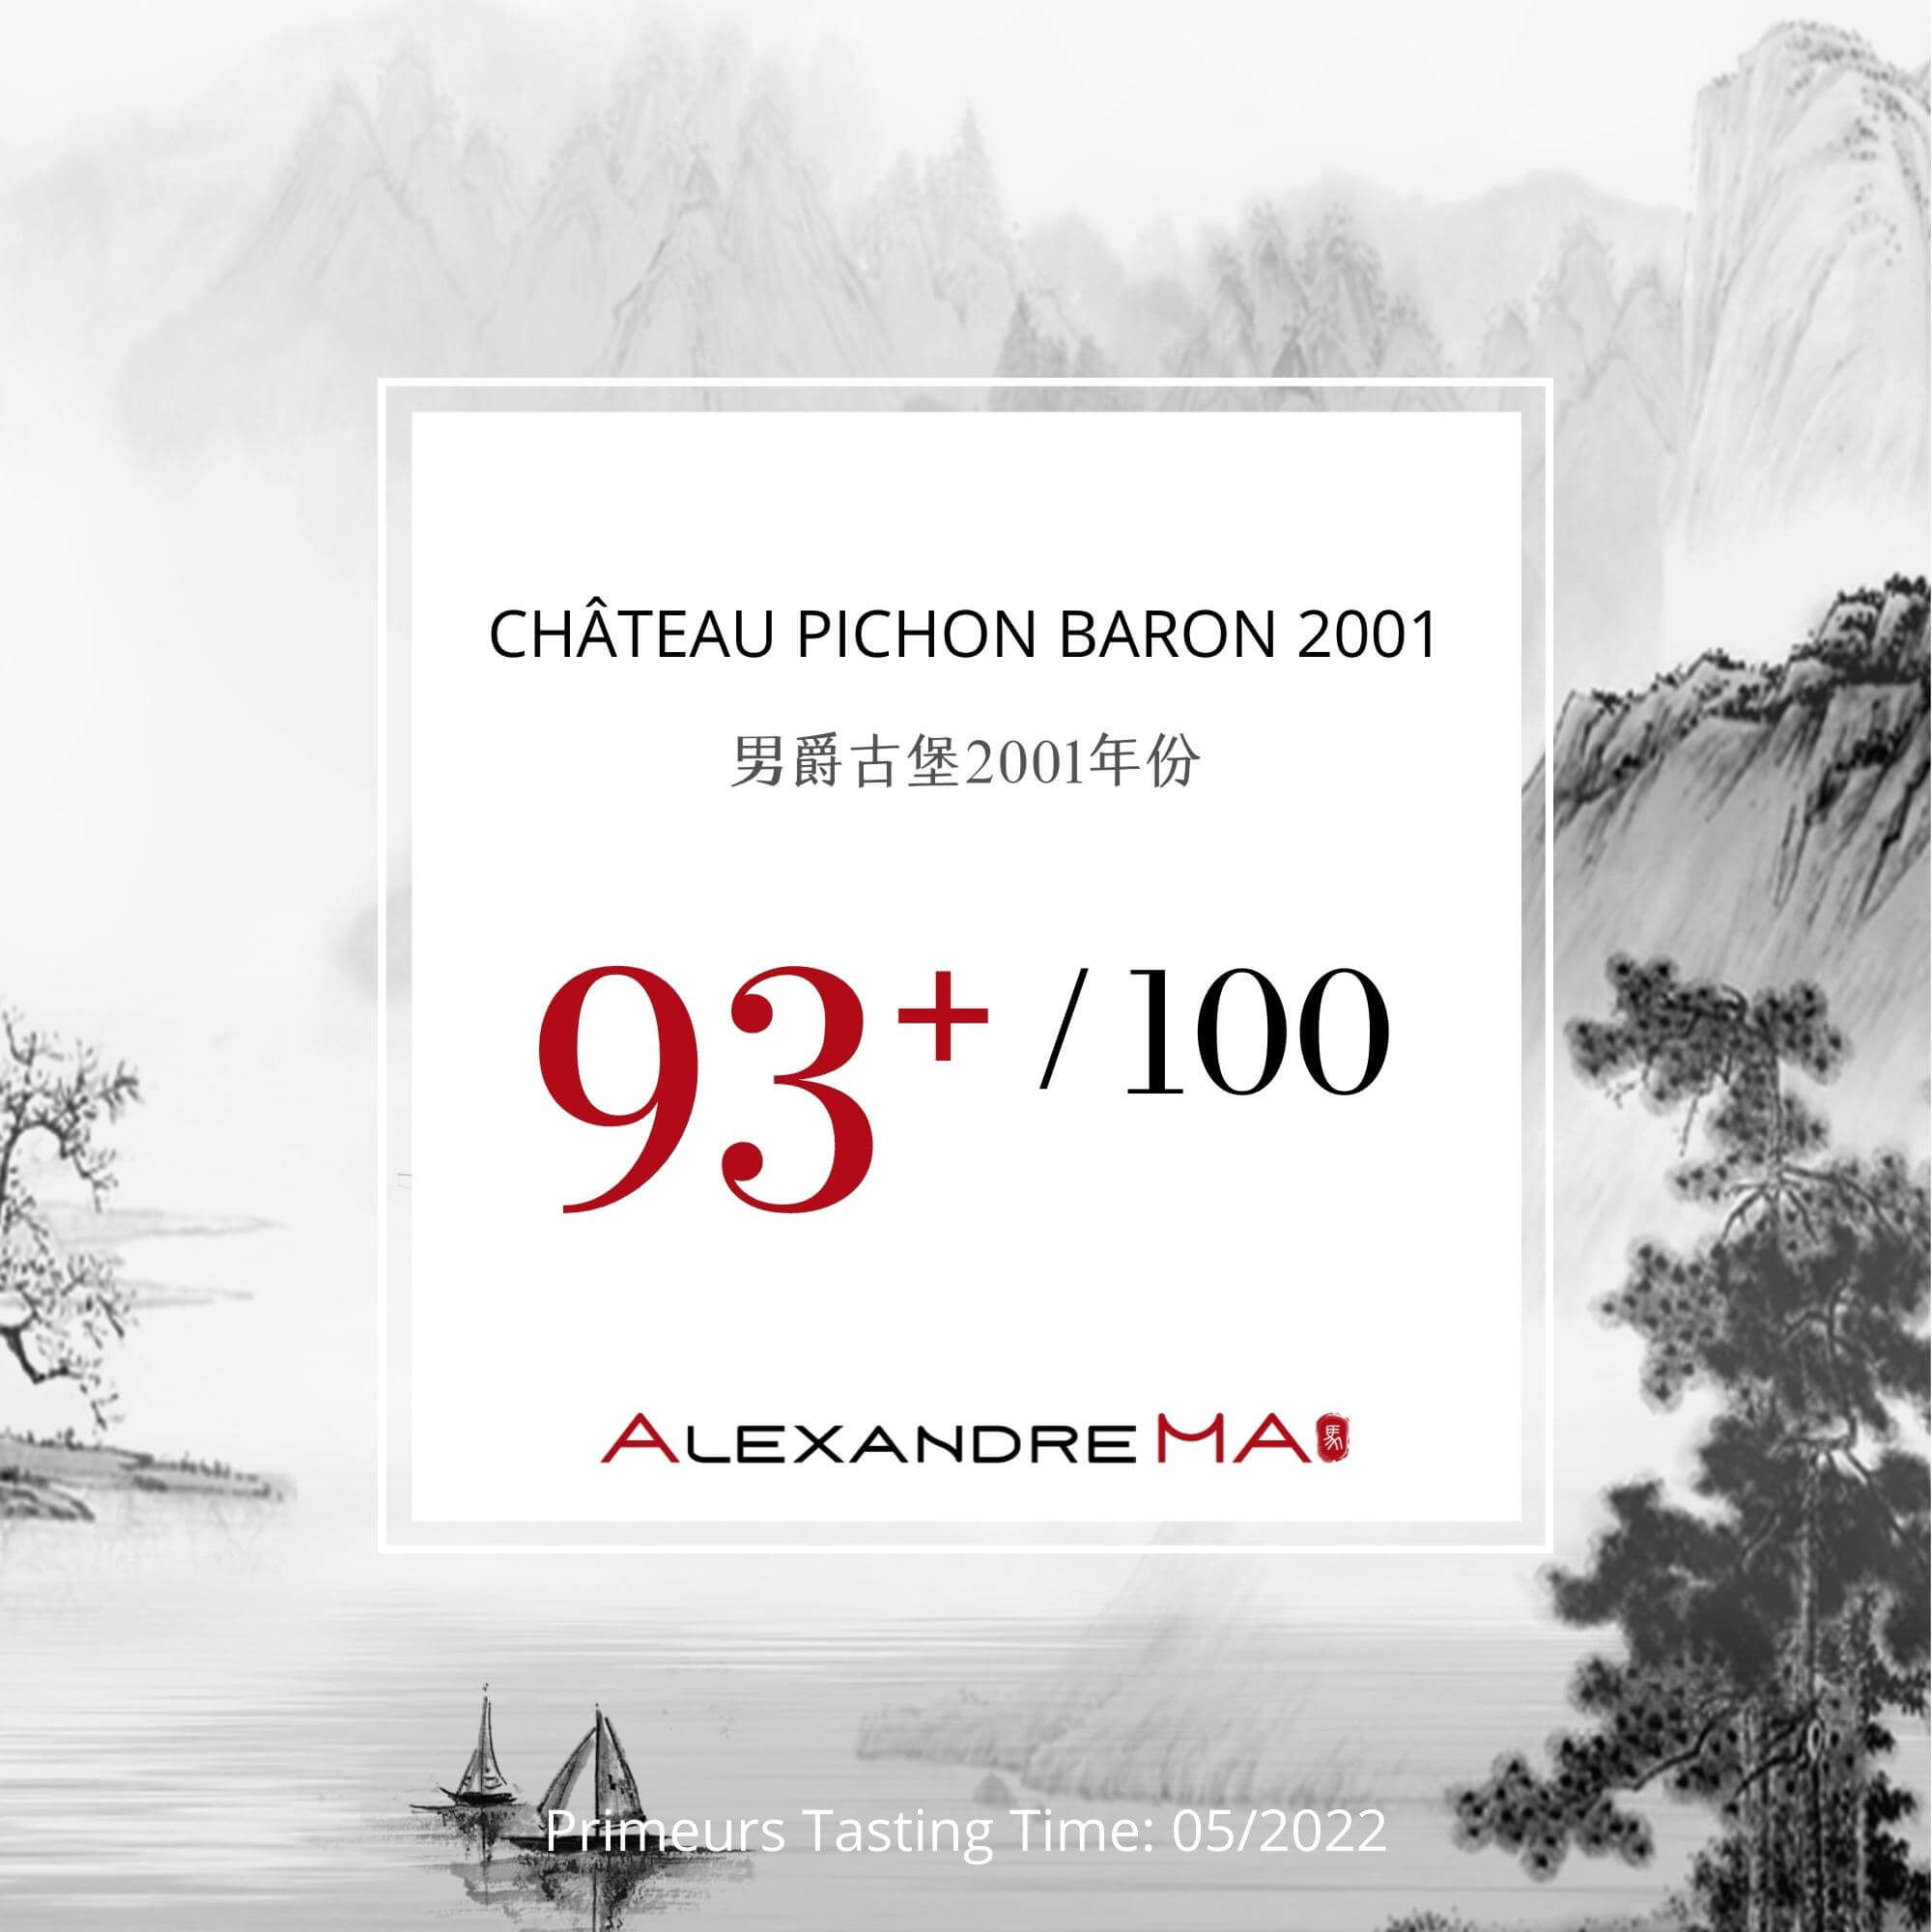 Château Pichon Baron 2001 - Alexandre MA